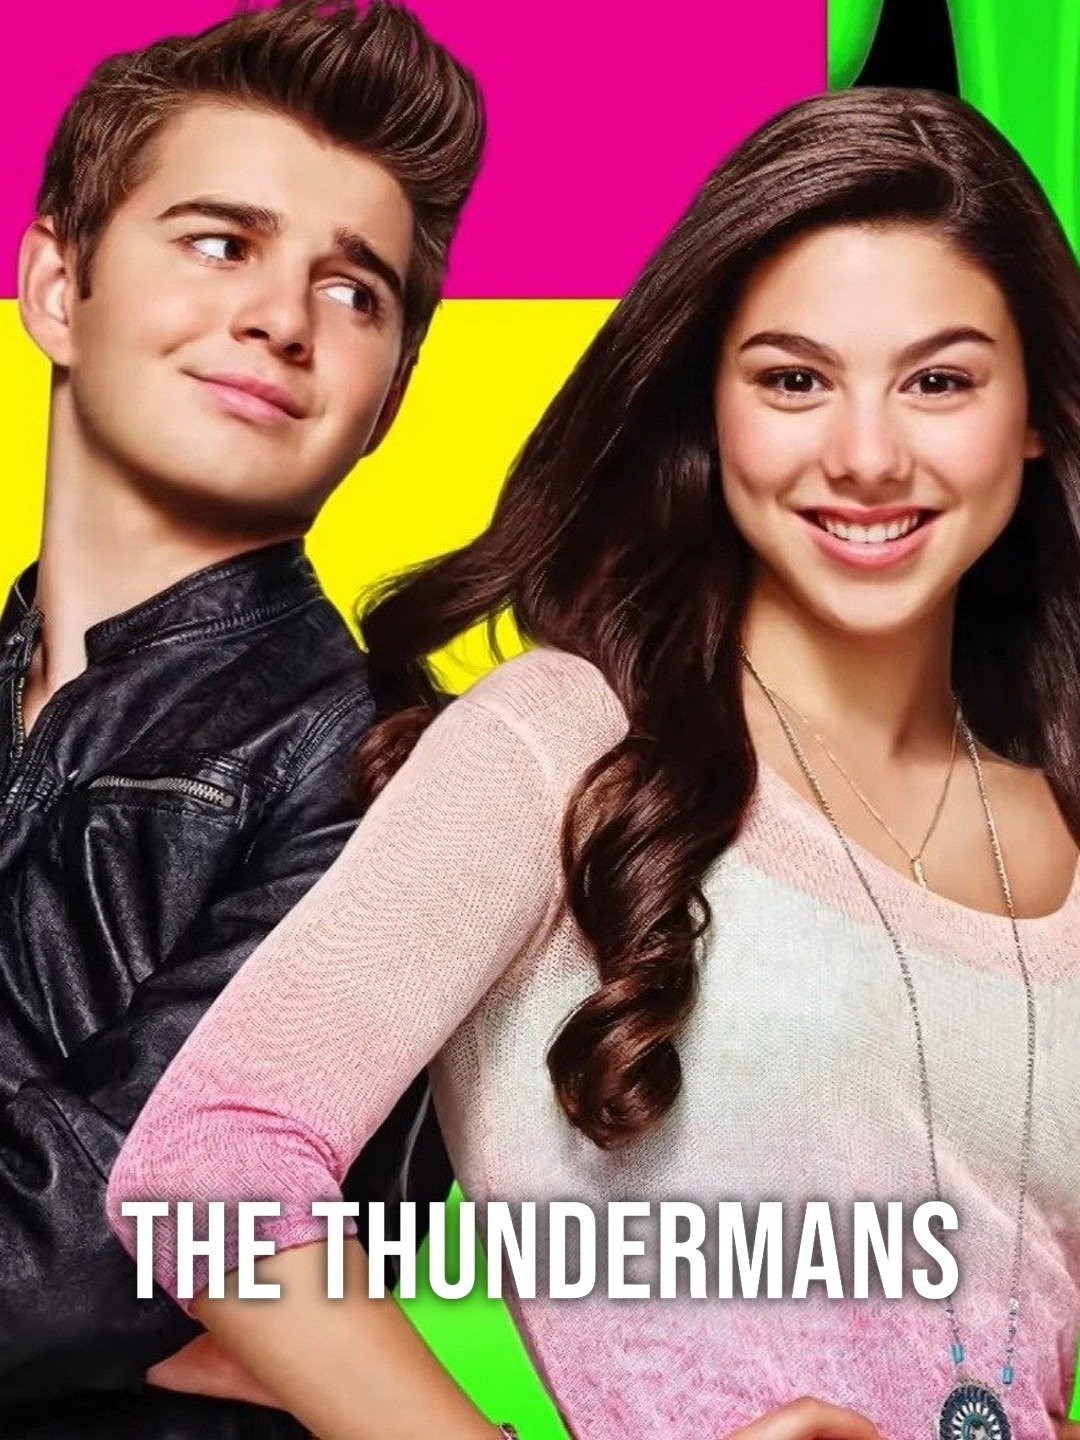 The Thundermans Season 3 Episodes - Watch on Paramount+